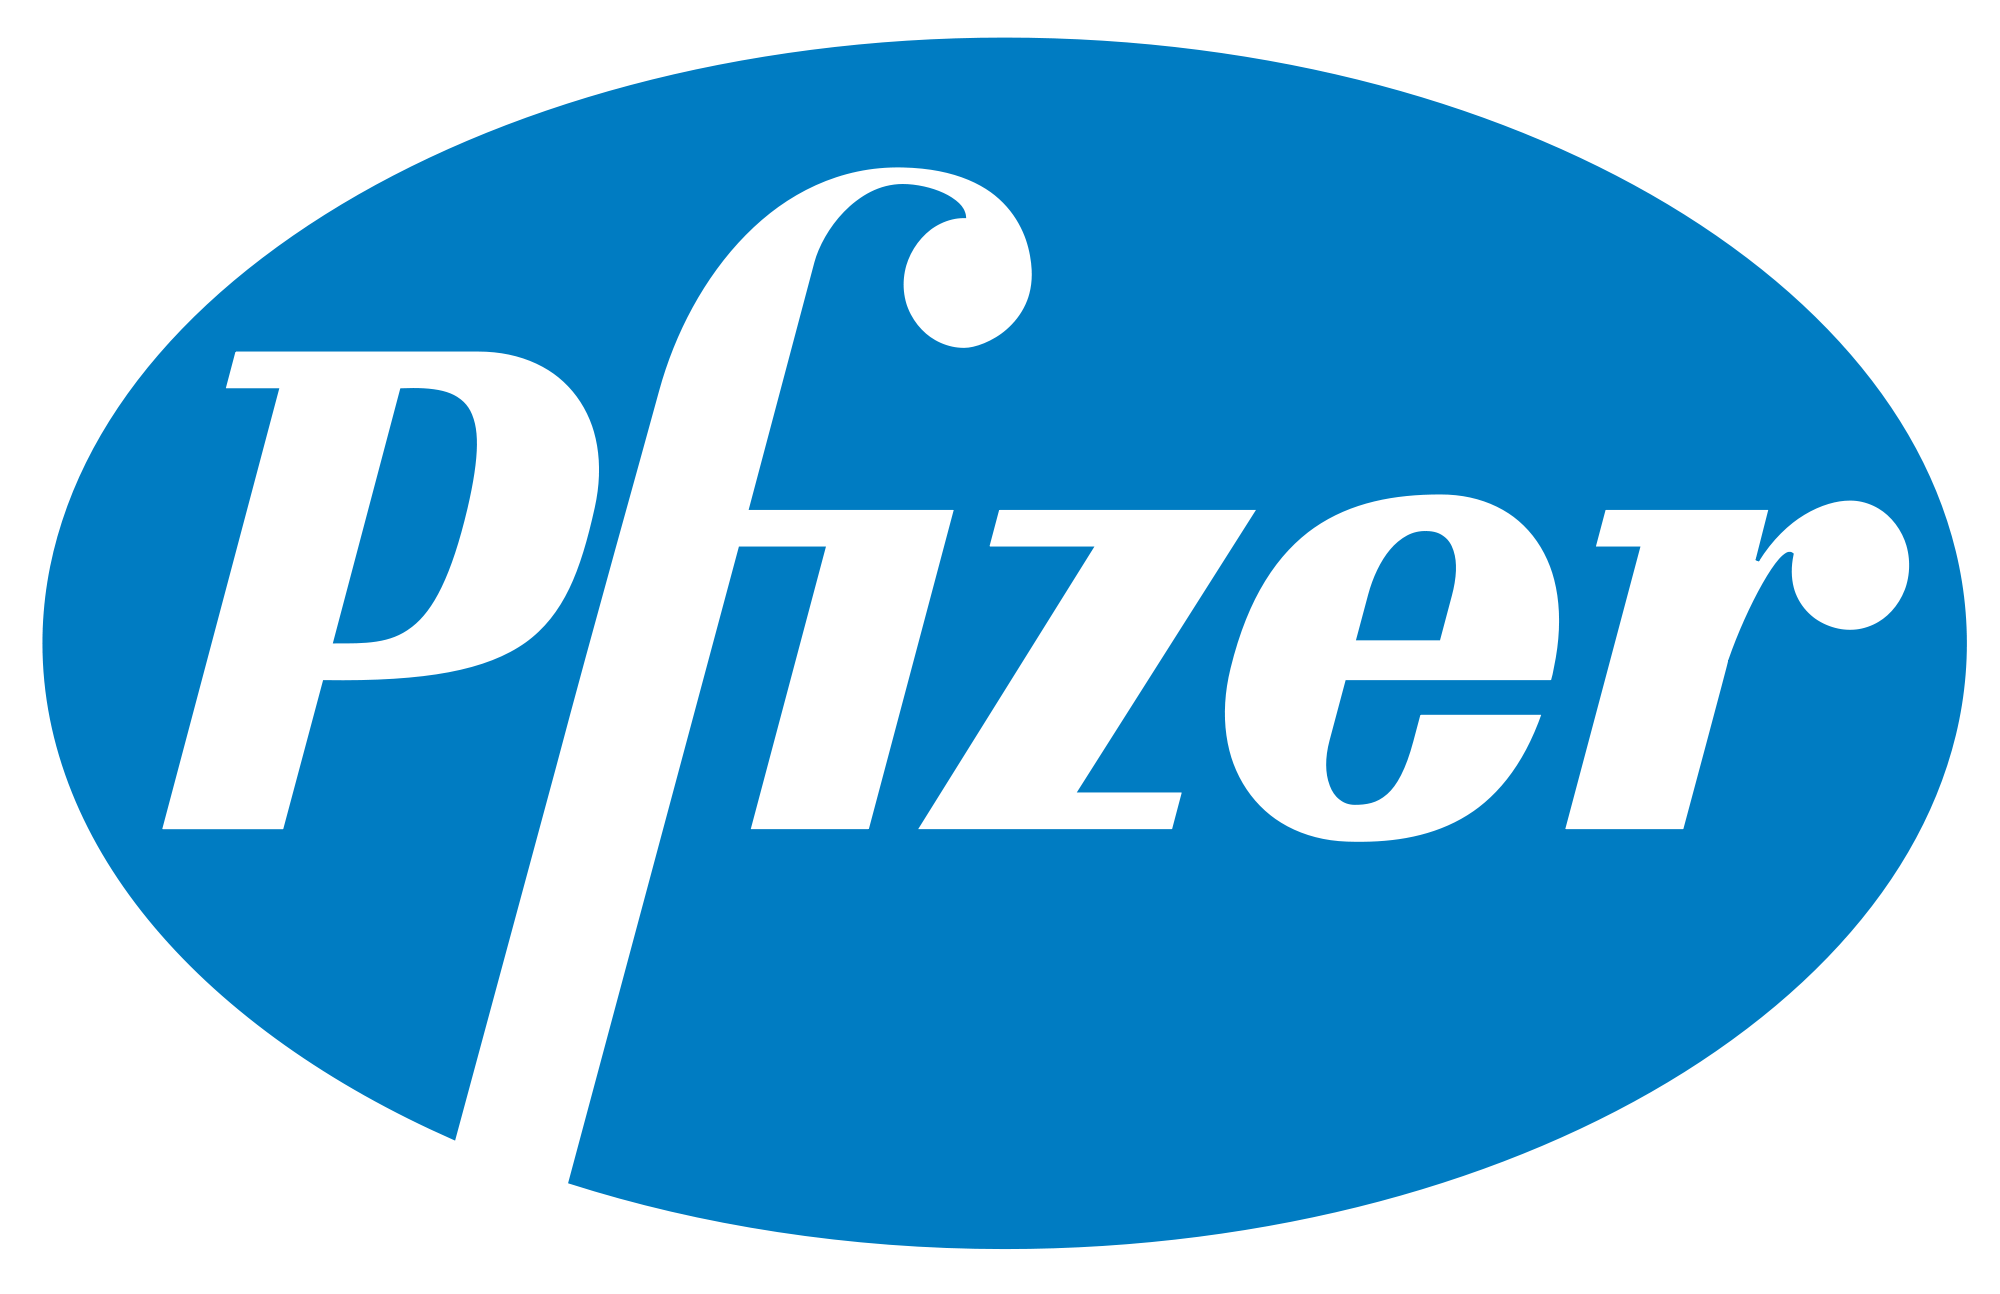 Image result for pfizer"